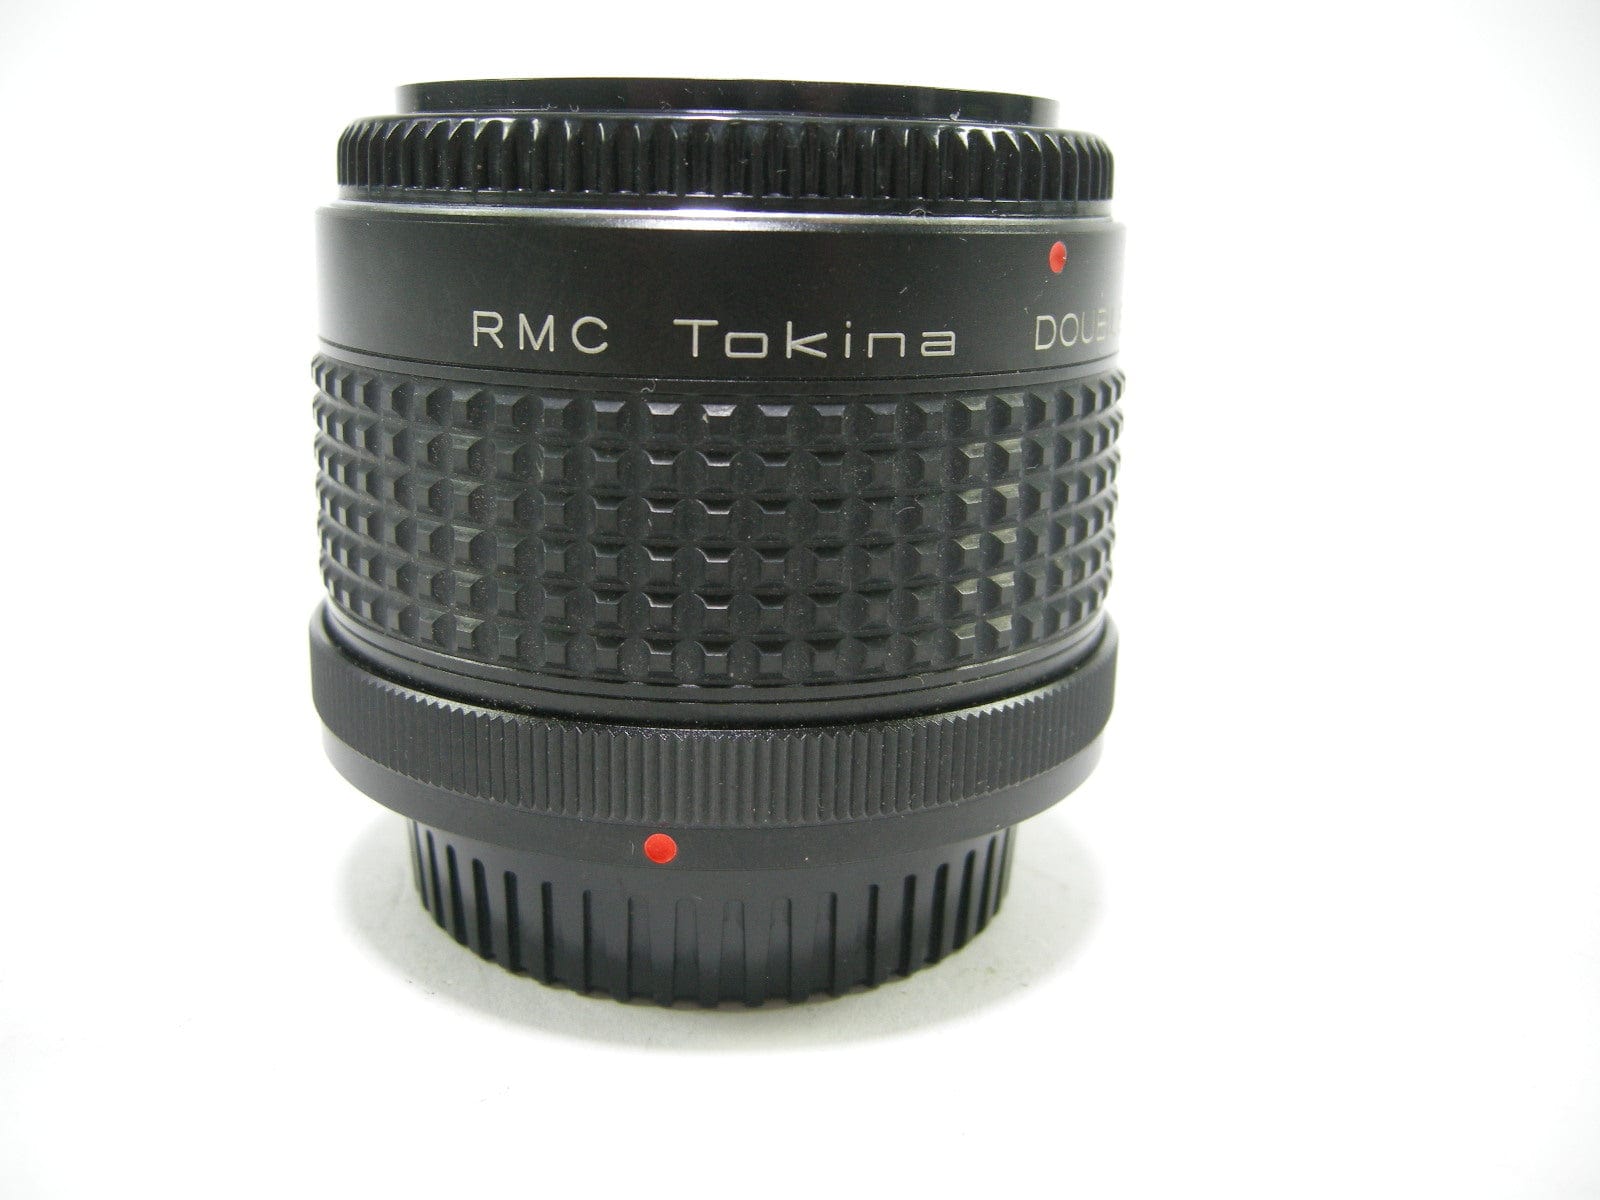 Tokina RMC doubler for Canon FD